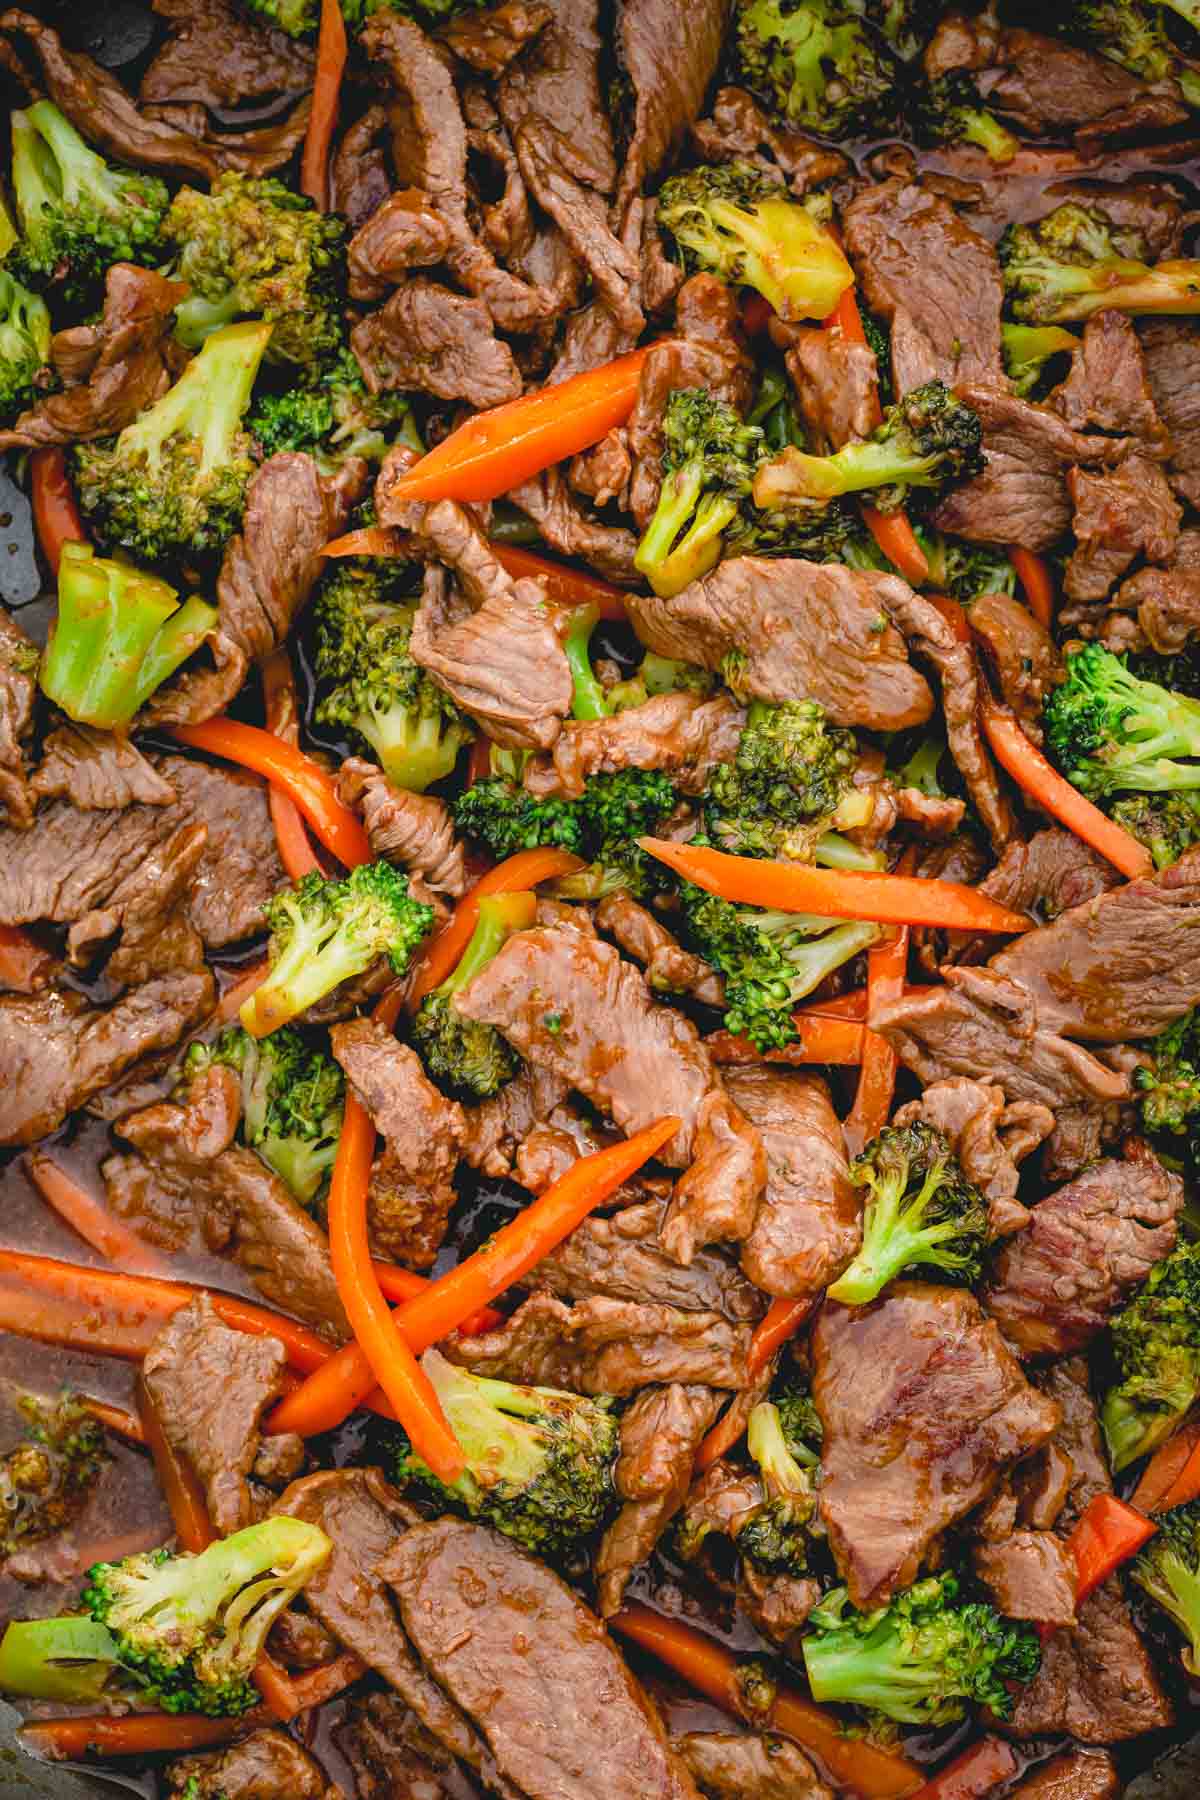 Beef and broccoli stir fry.